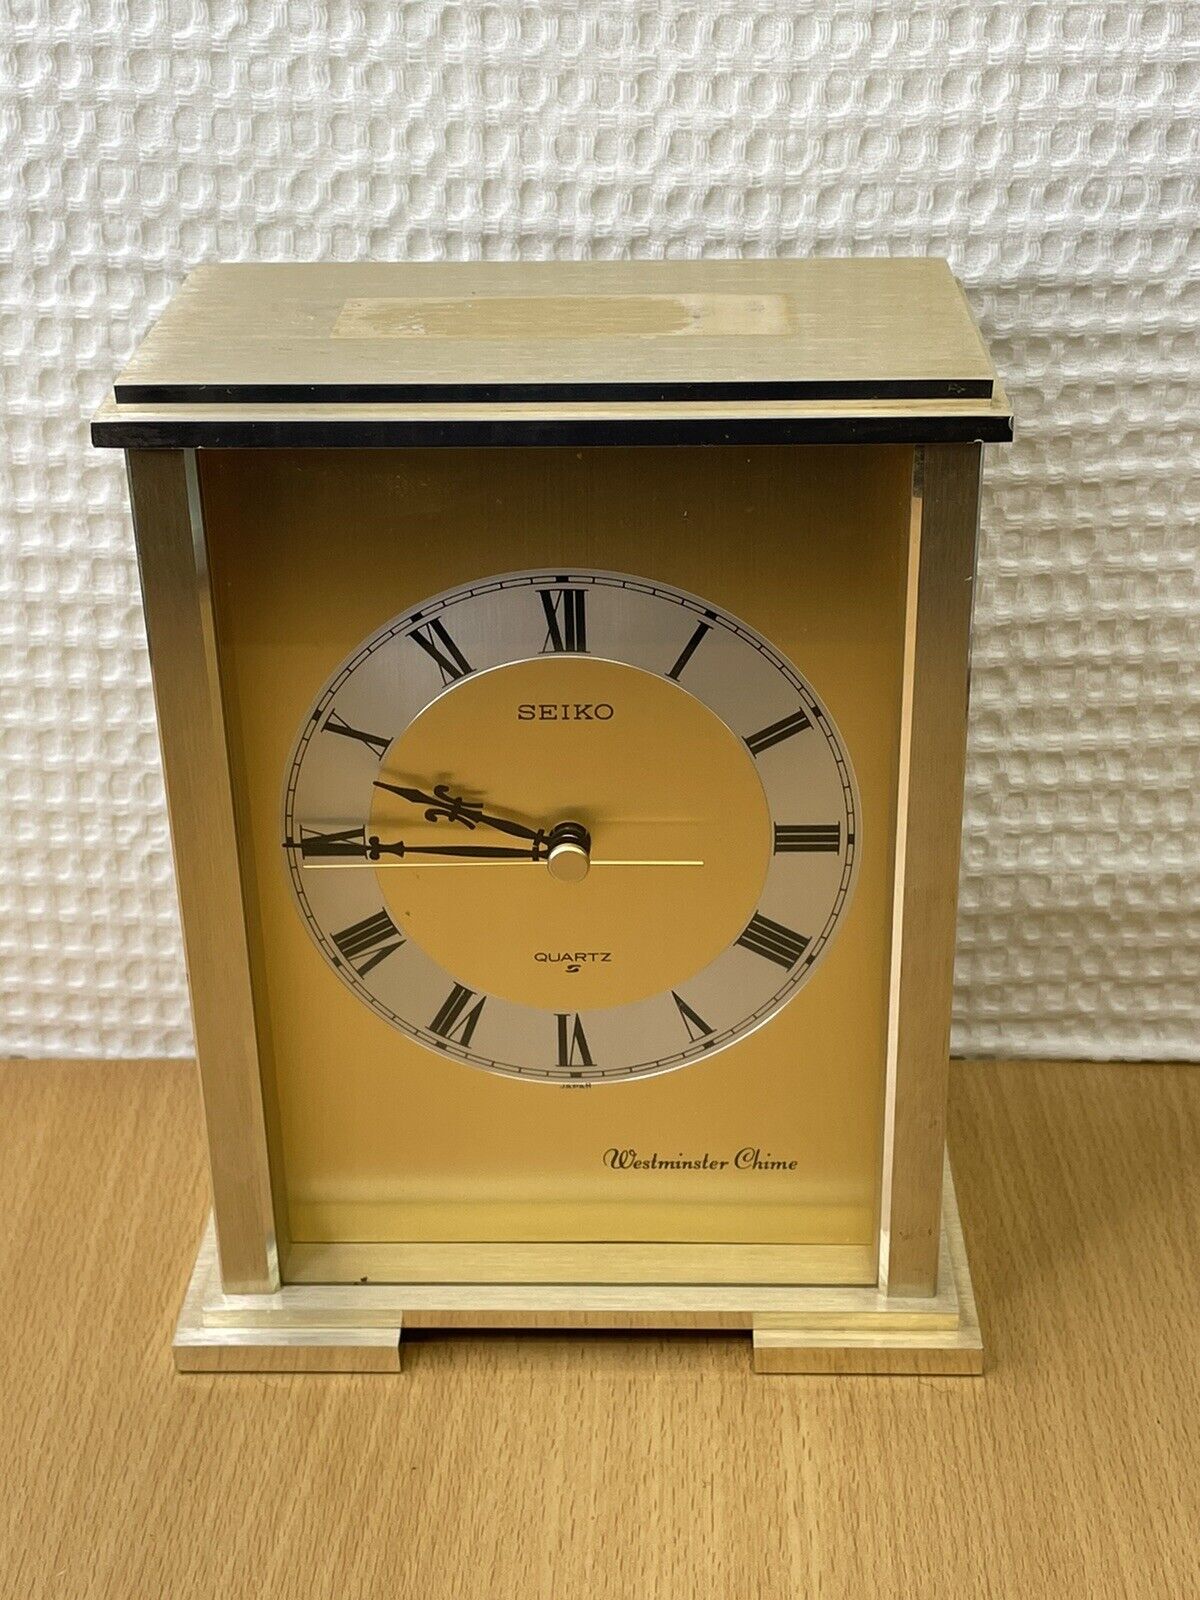 Seiko Westminster Chime Brass Mantel Shelf Clock Elegant Vintage 